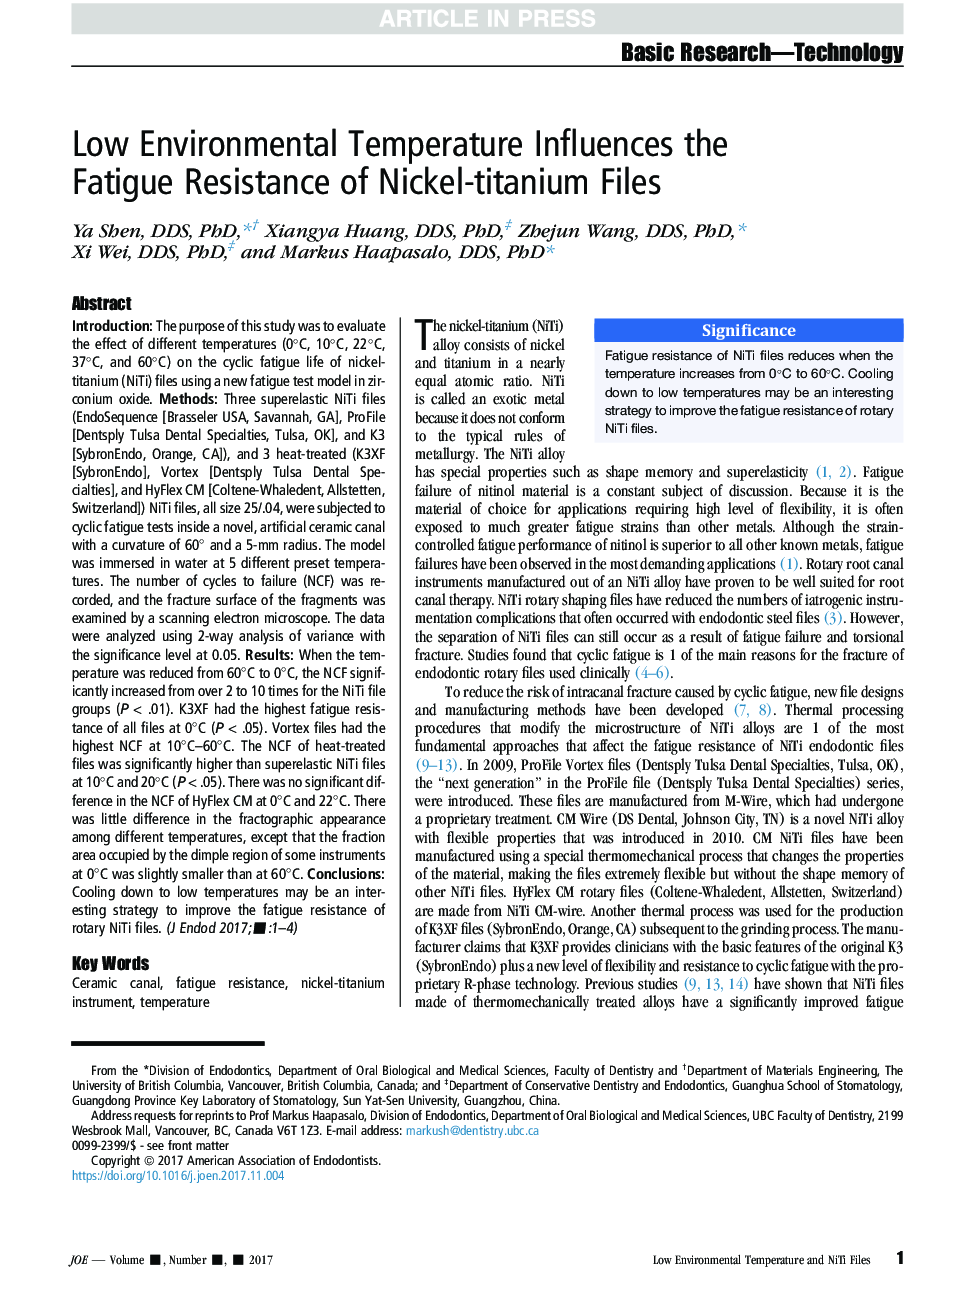 تاثیرات کم دما محیط بر مقاومت خستگی فایلهای نیکل تیتانیوم 